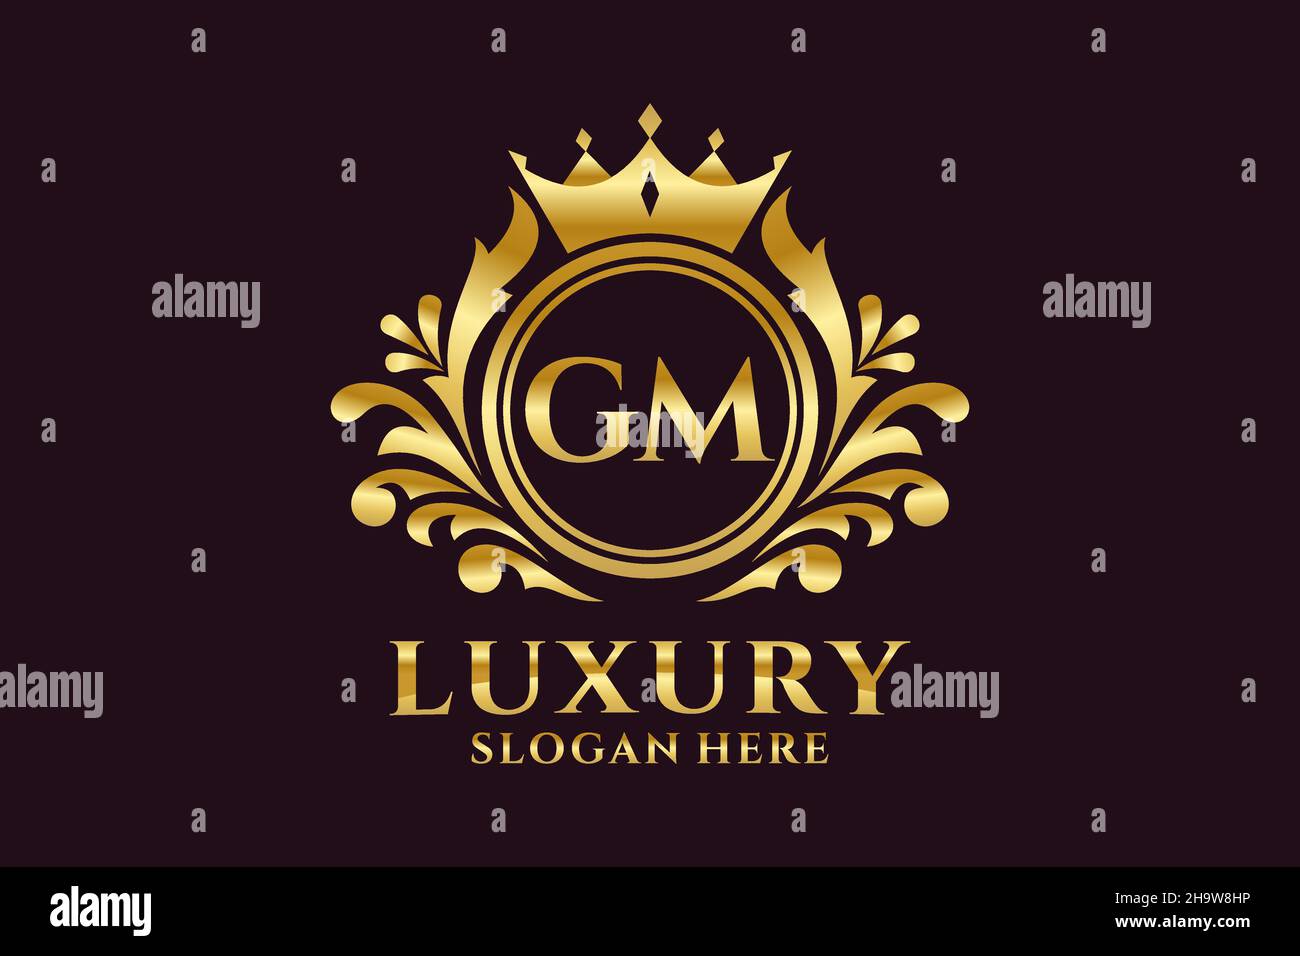 GM Letter Royal Luxury Logo-Vorlage in Vektorgrafik für luxuriöse Branding-Projekte und andere Vektorgrafik. Stock Vektor